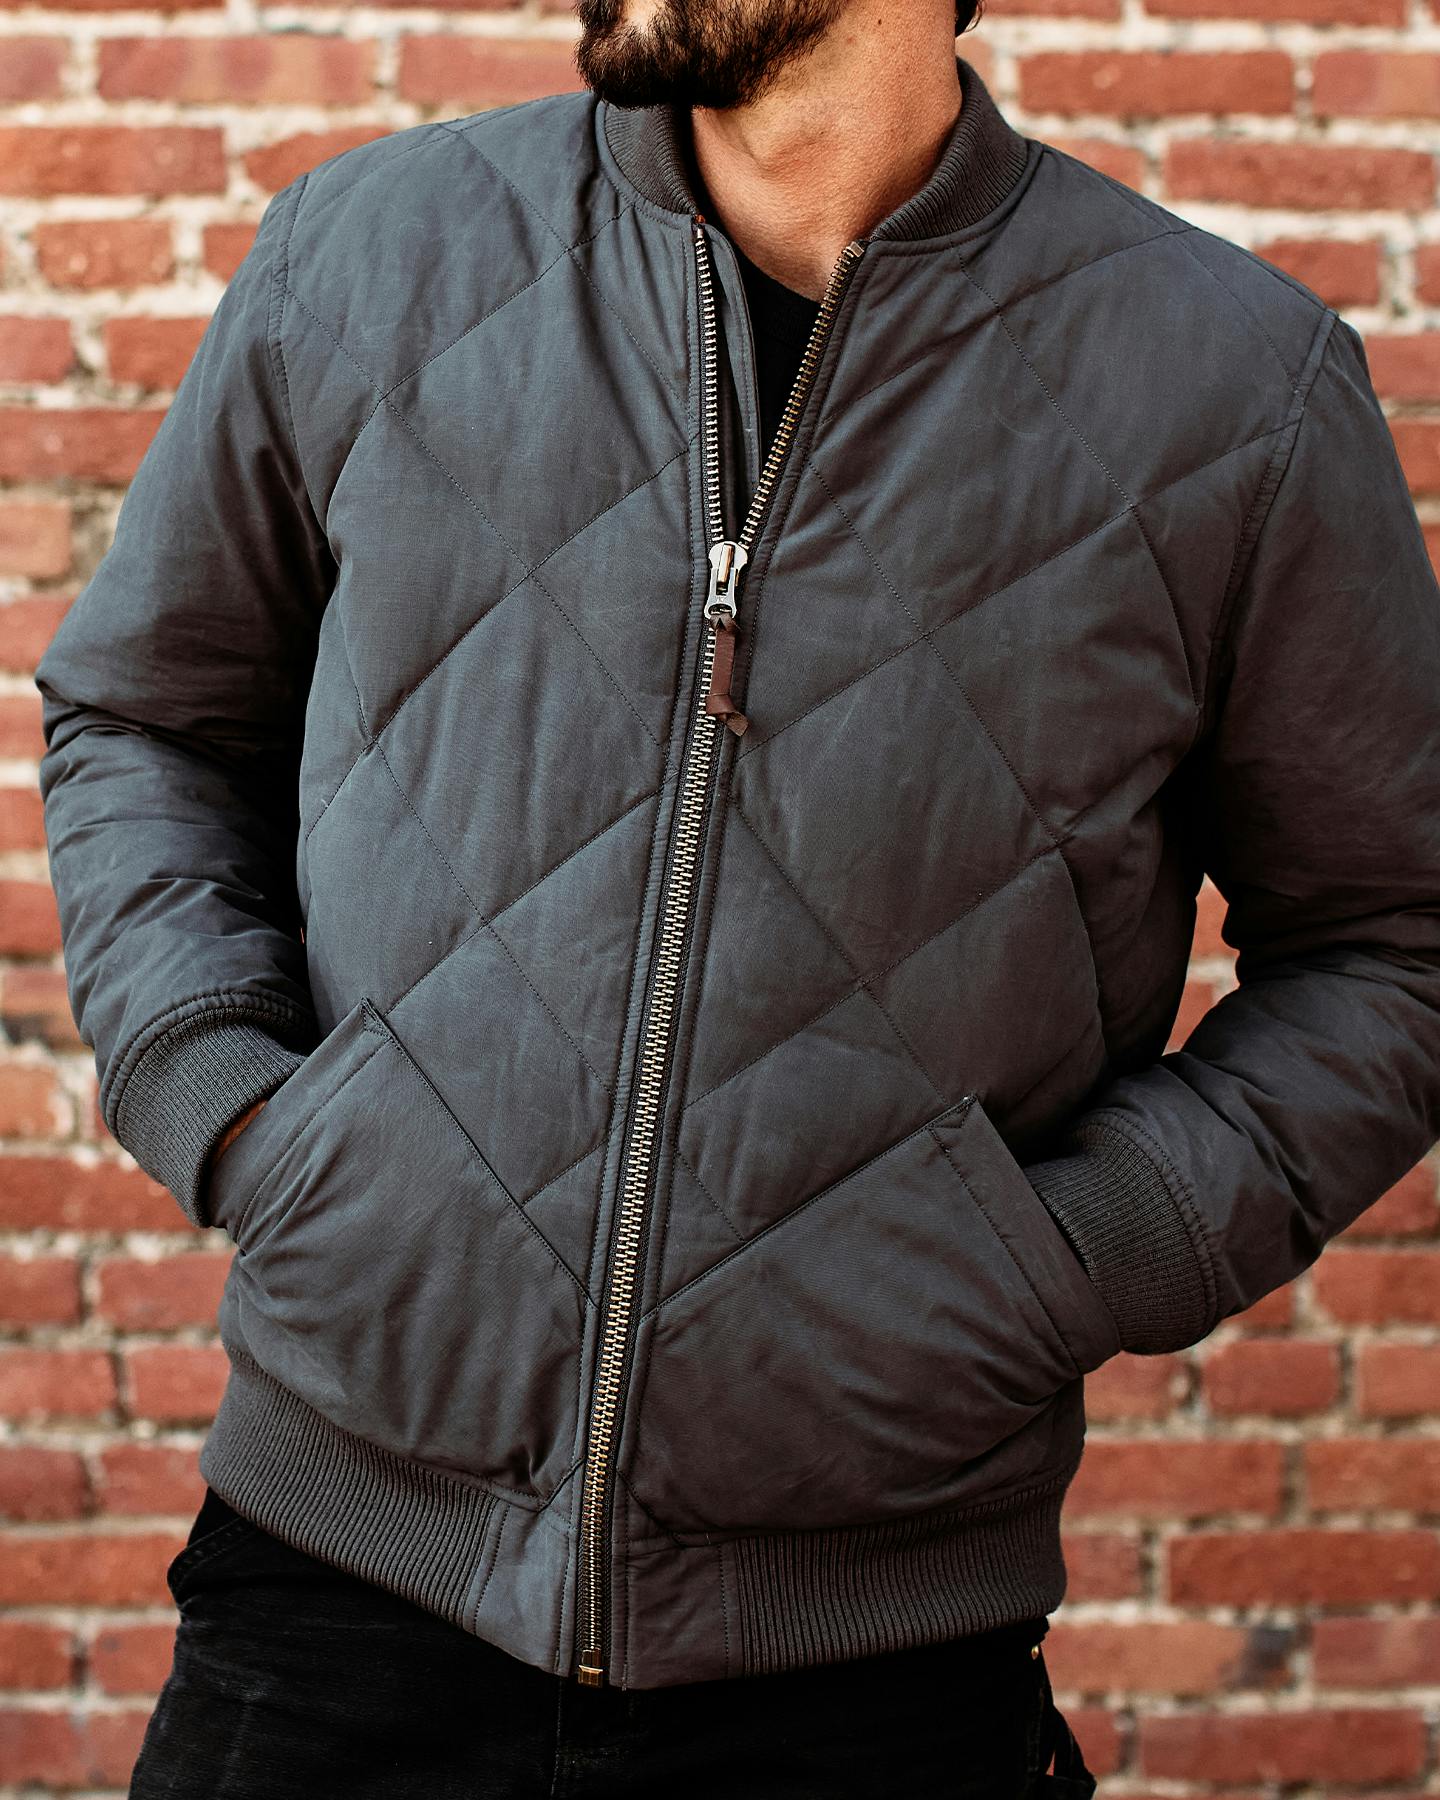 Man wearing jacket near brick wall